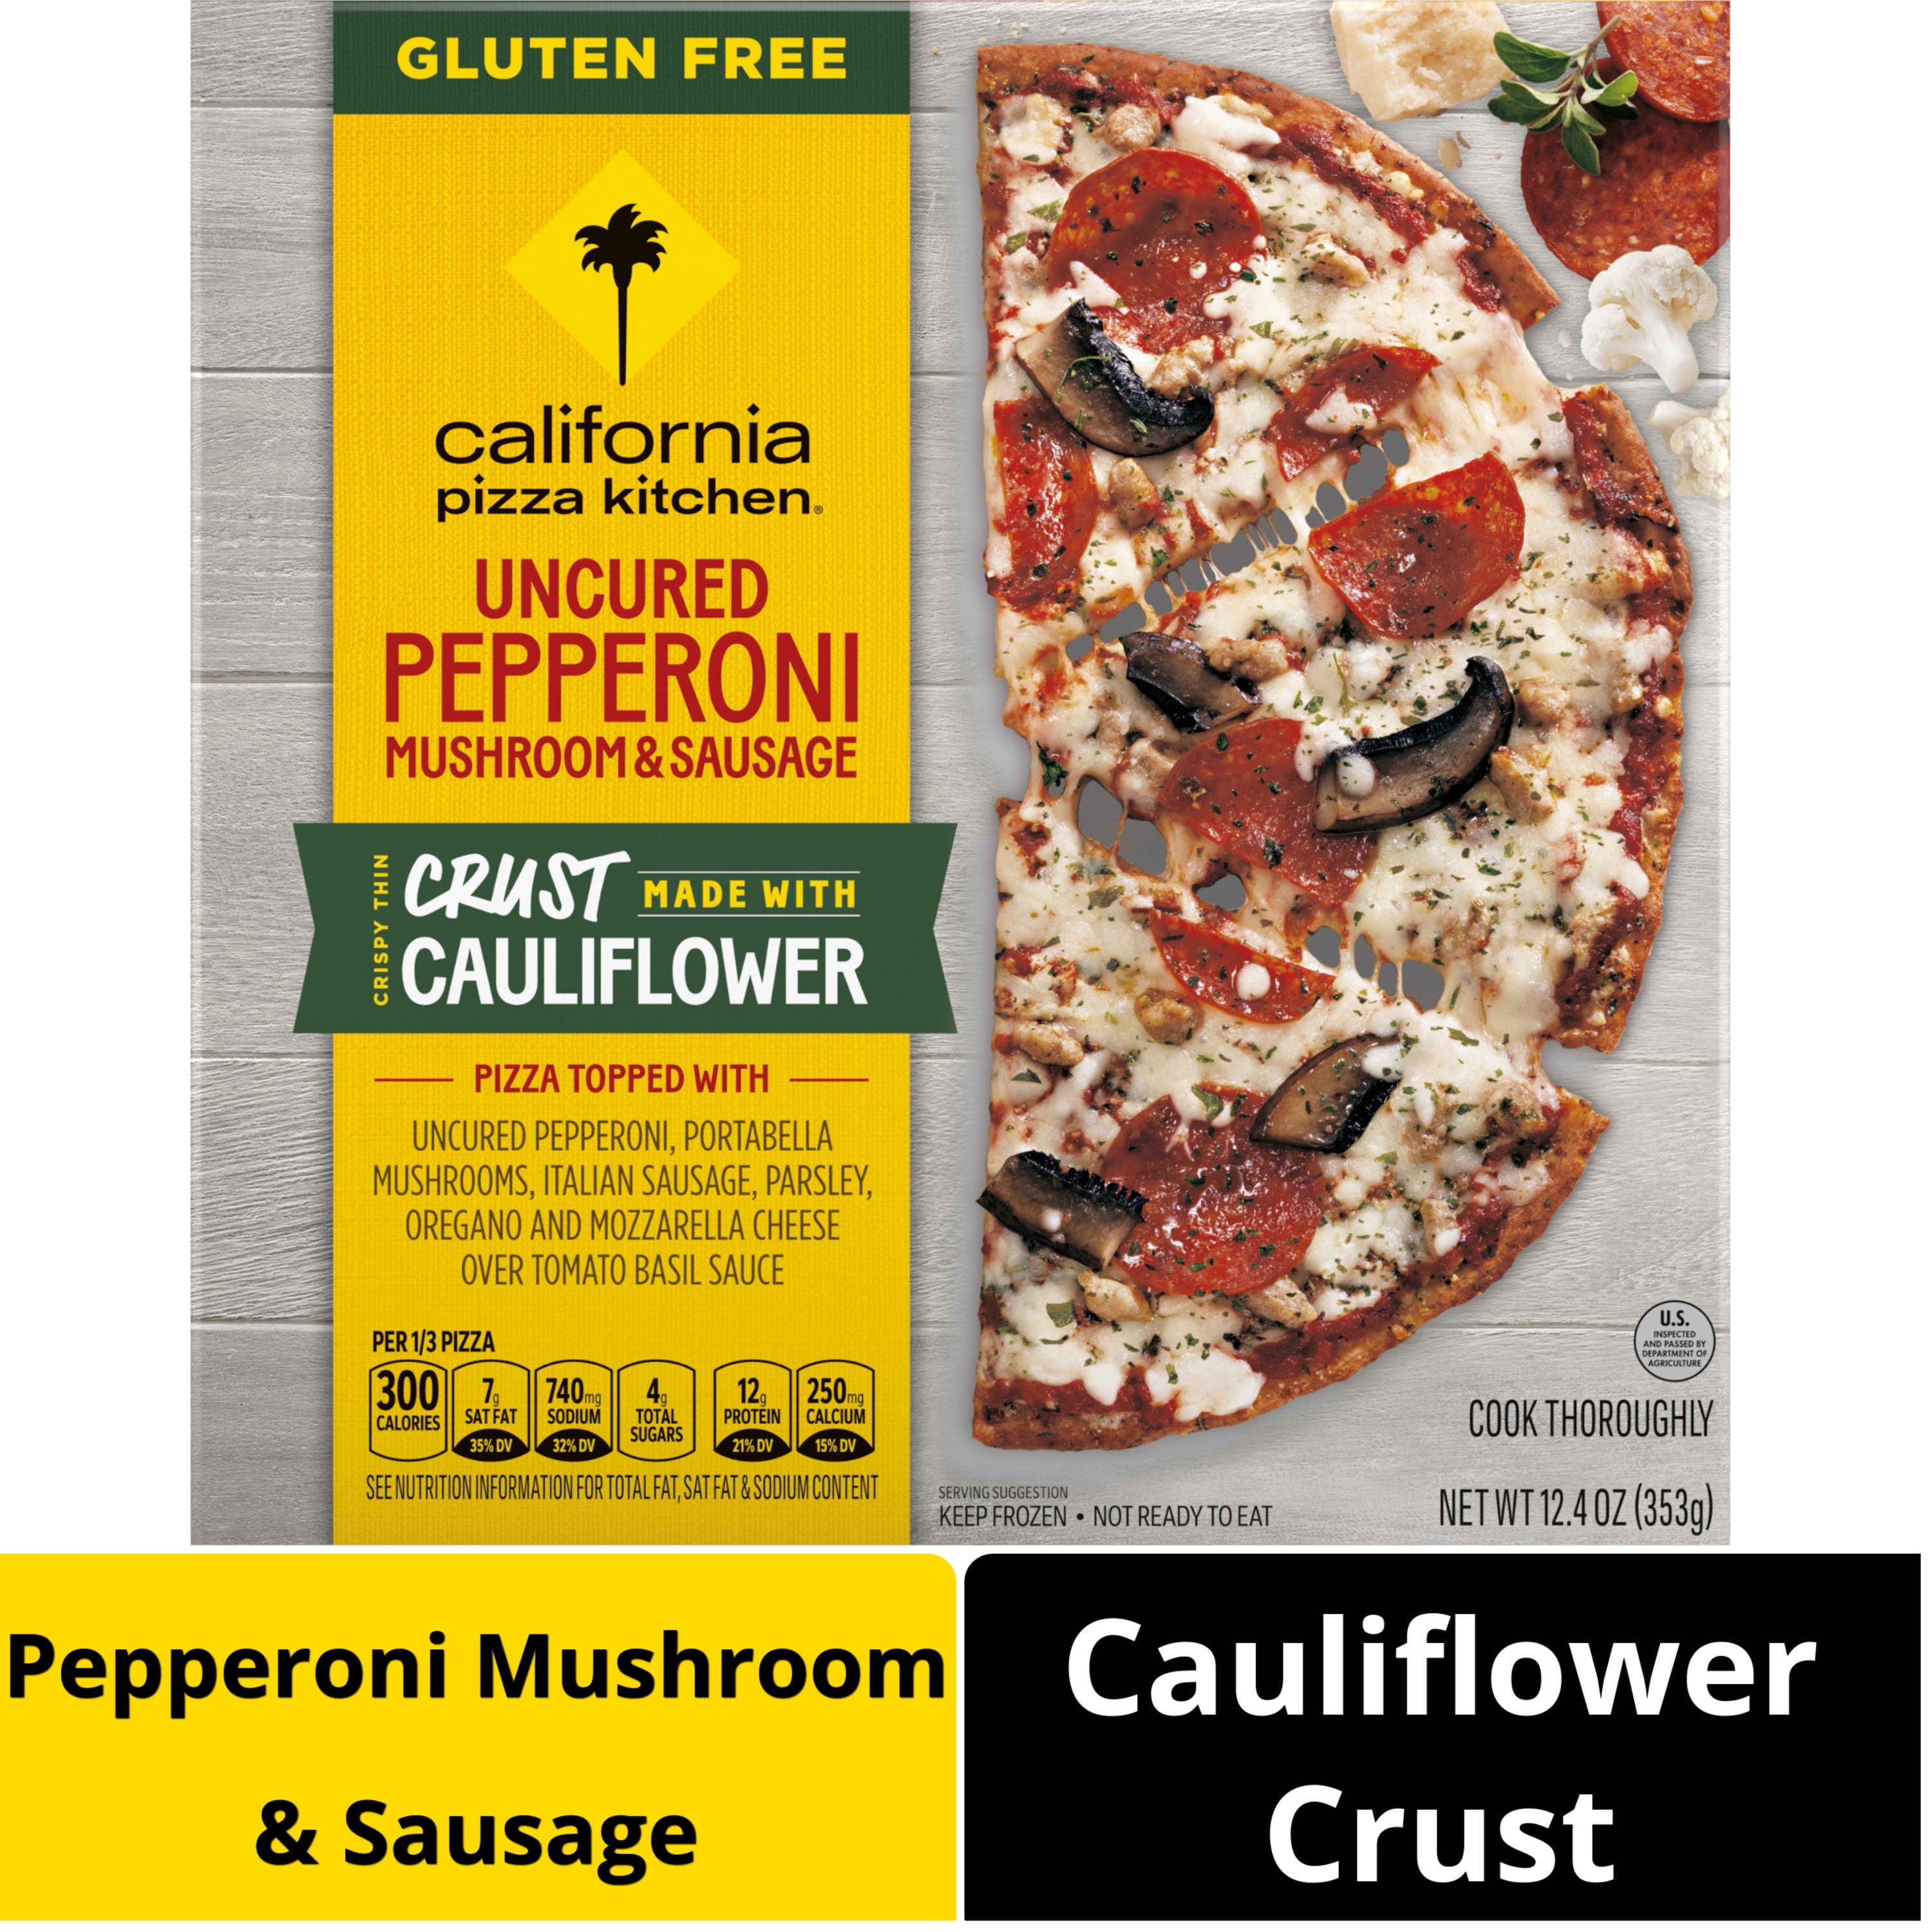 California Pizza Kitchen Two $50 E-Gift Cards